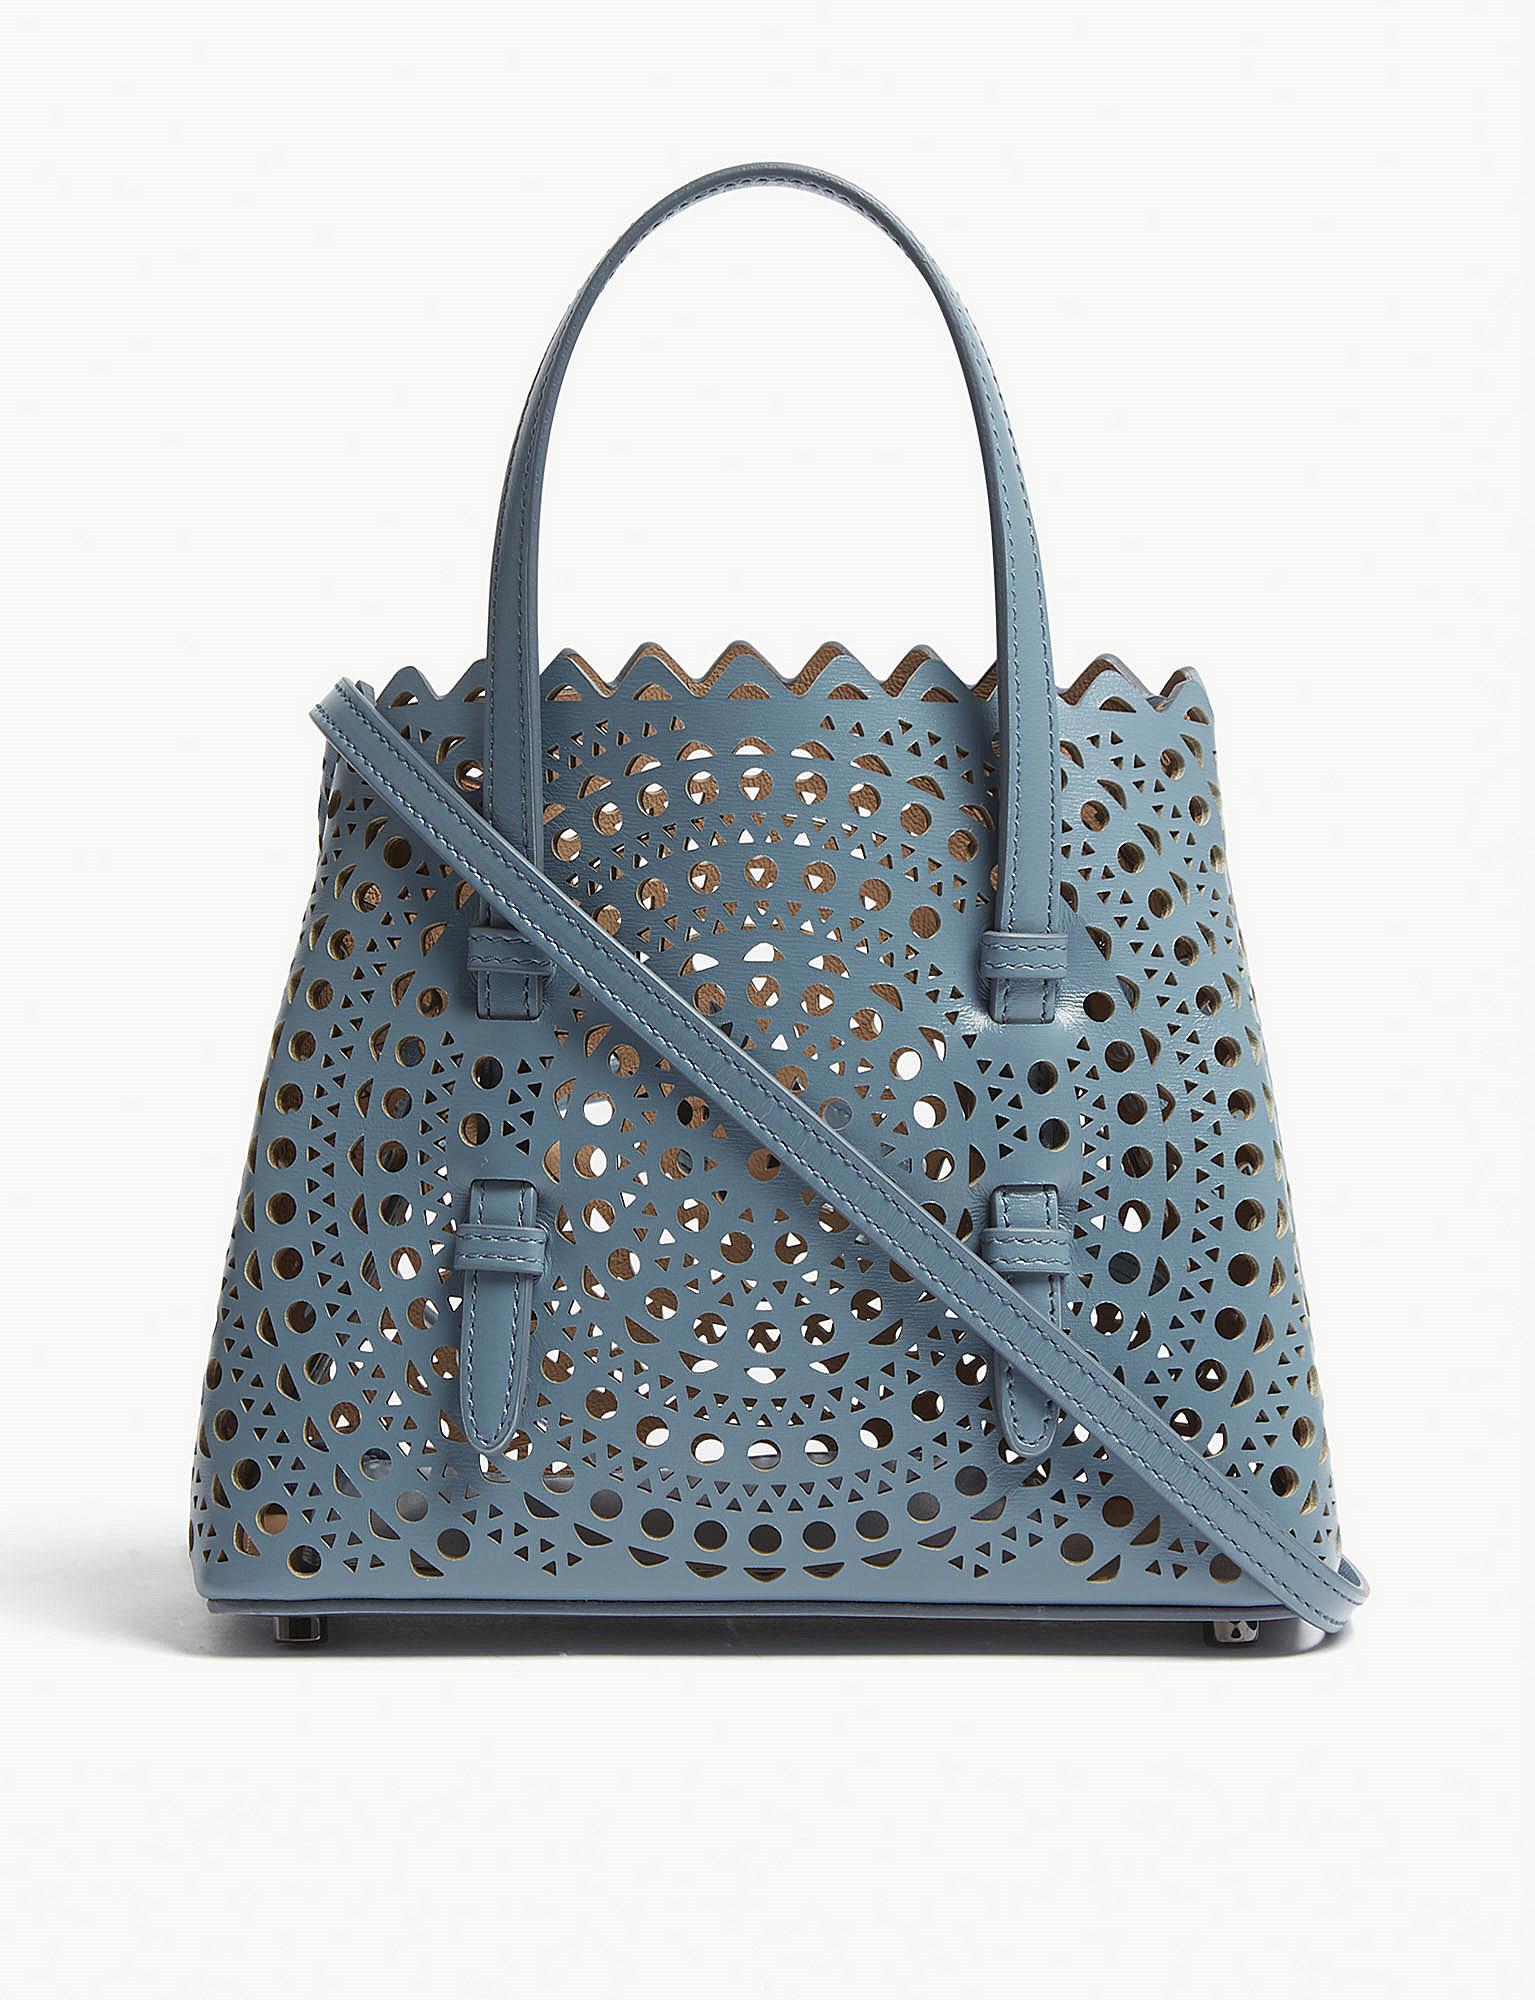 Alaïa Micro Laser-cut Leather Cross-body Bag in Blue - Lyst